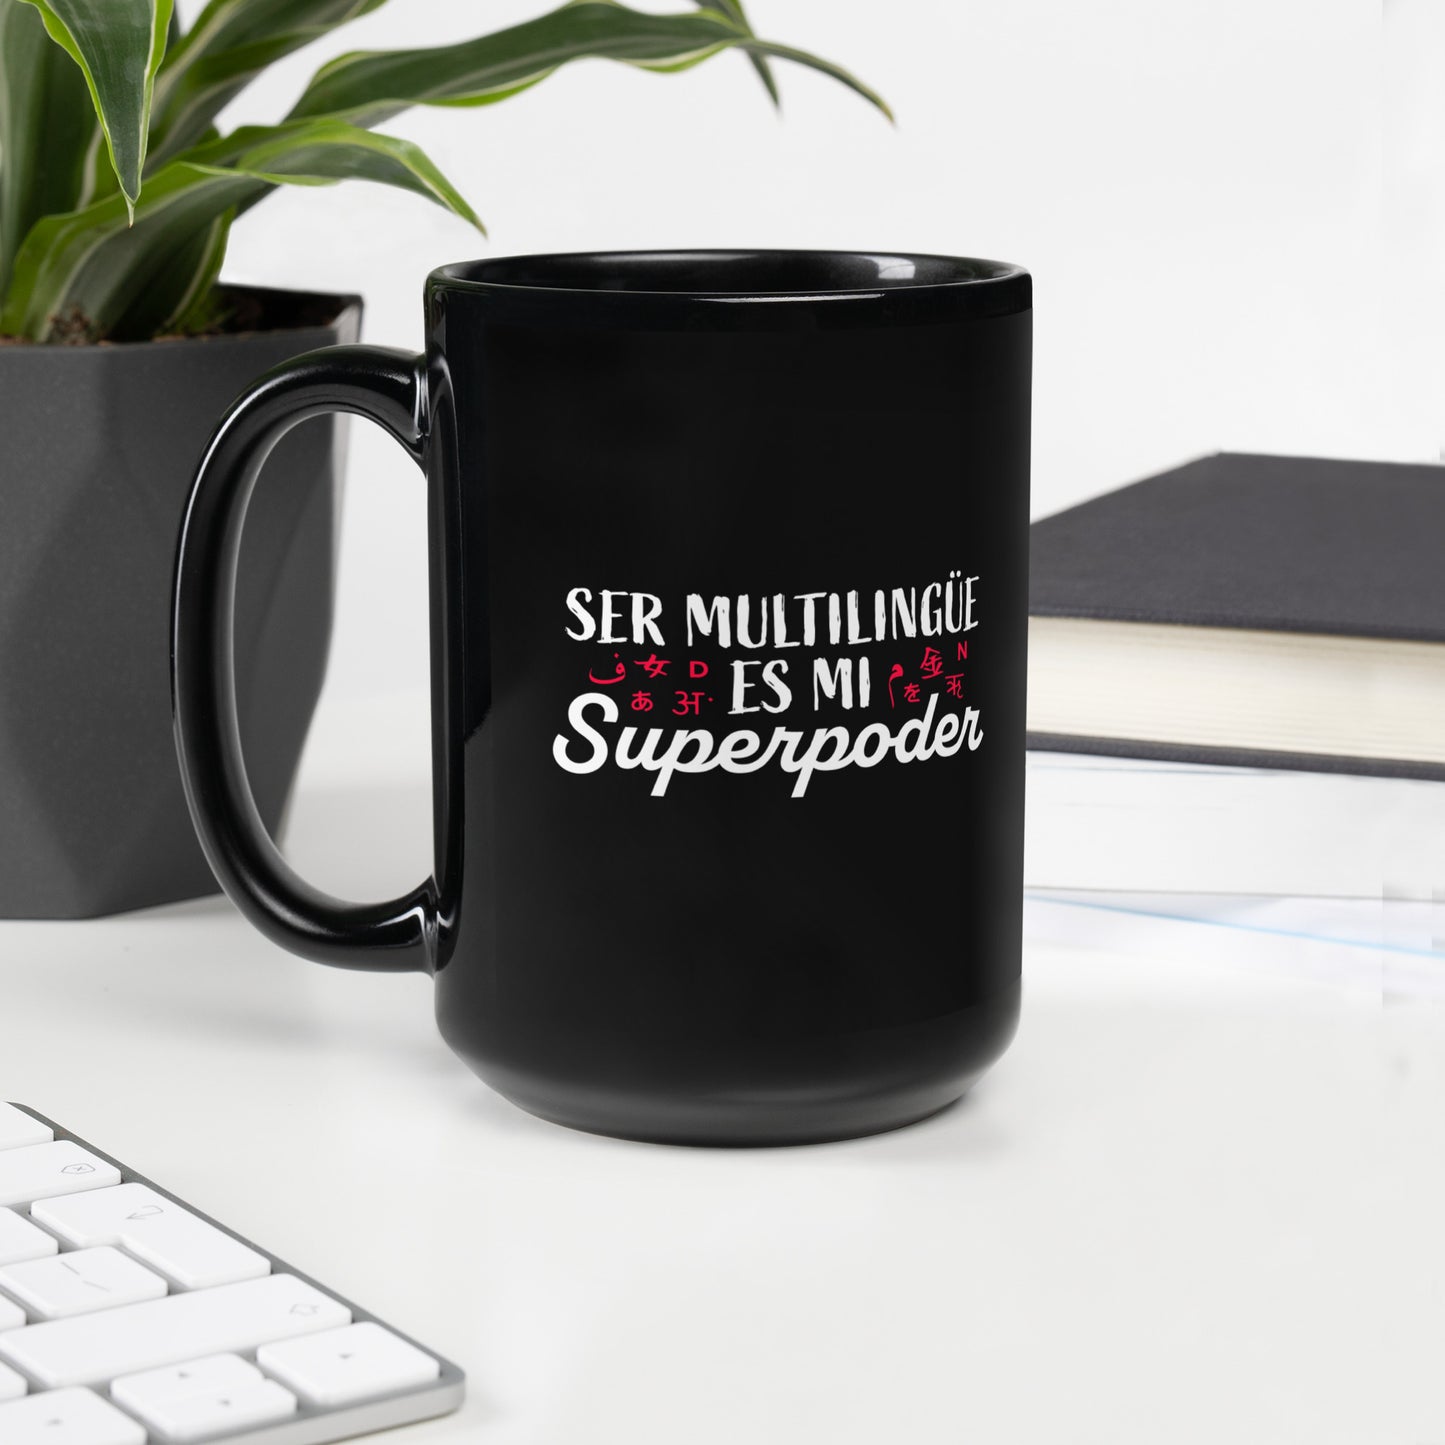 Superpoder Black Glossy Mug.